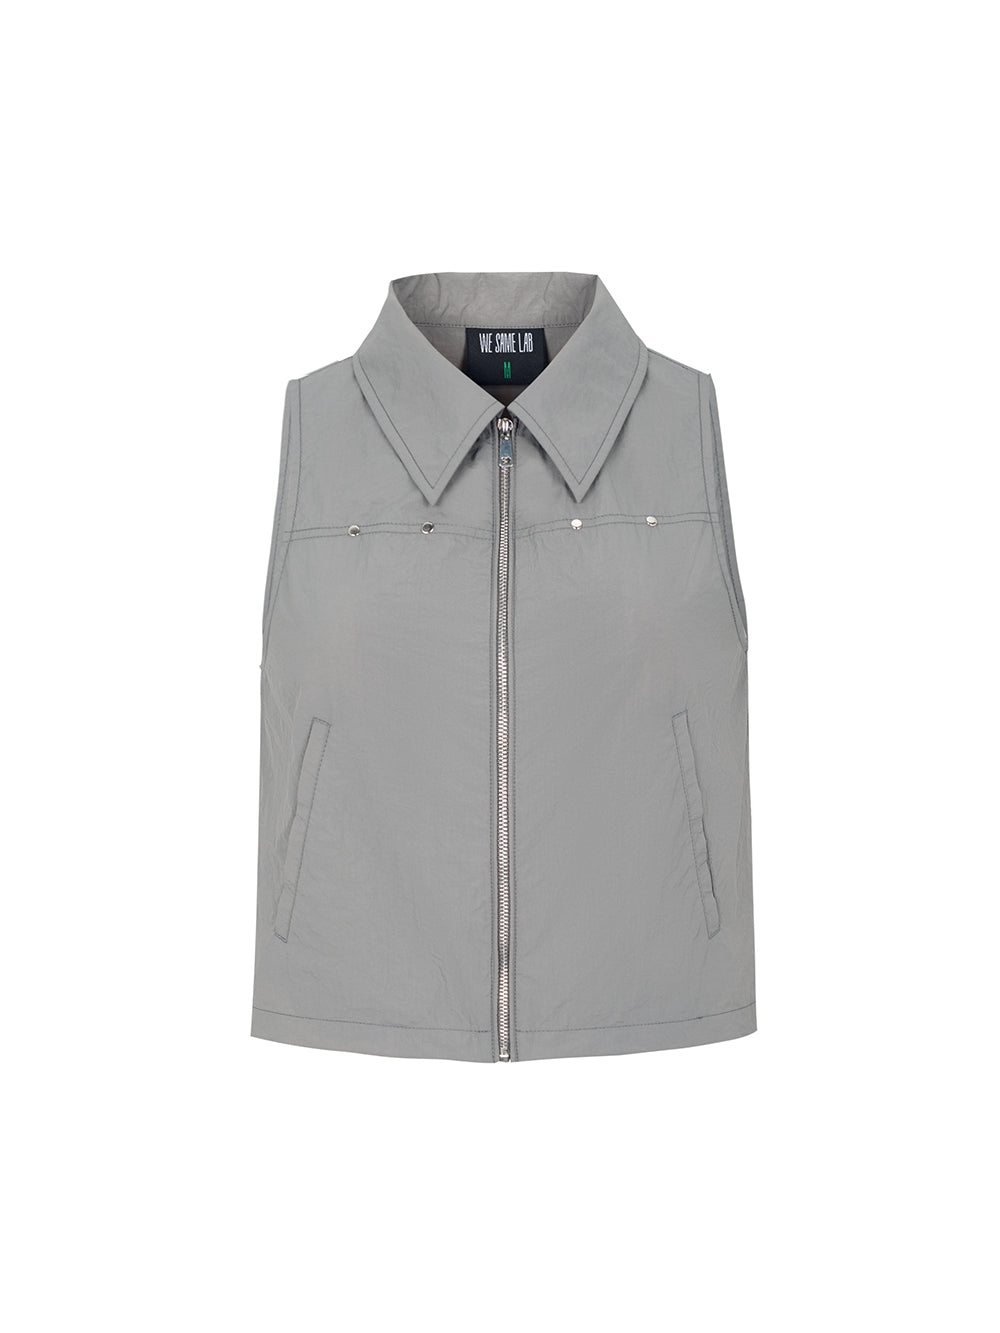 MUKTANK×WESAME Simple Loose Collared Workwear-inspired Vest